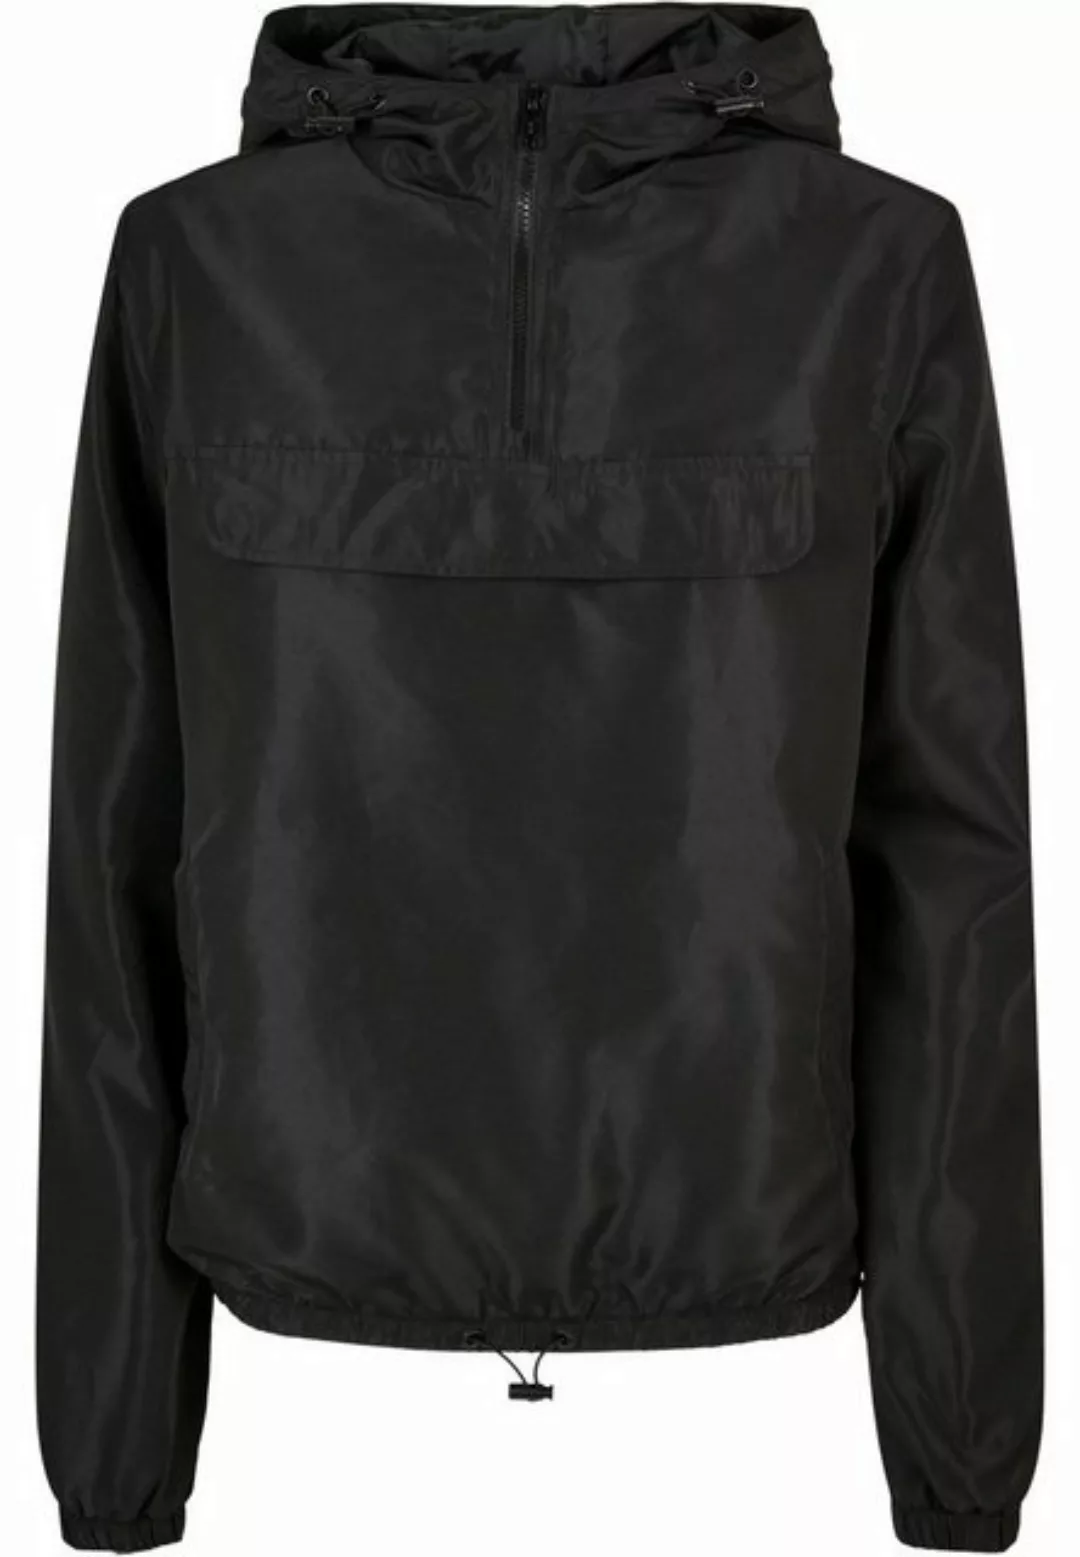 URBAN CLASSICS Outdoorjacke "Damen Ladies Recycled Basic Pull Over Jacket", günstig online kaufen